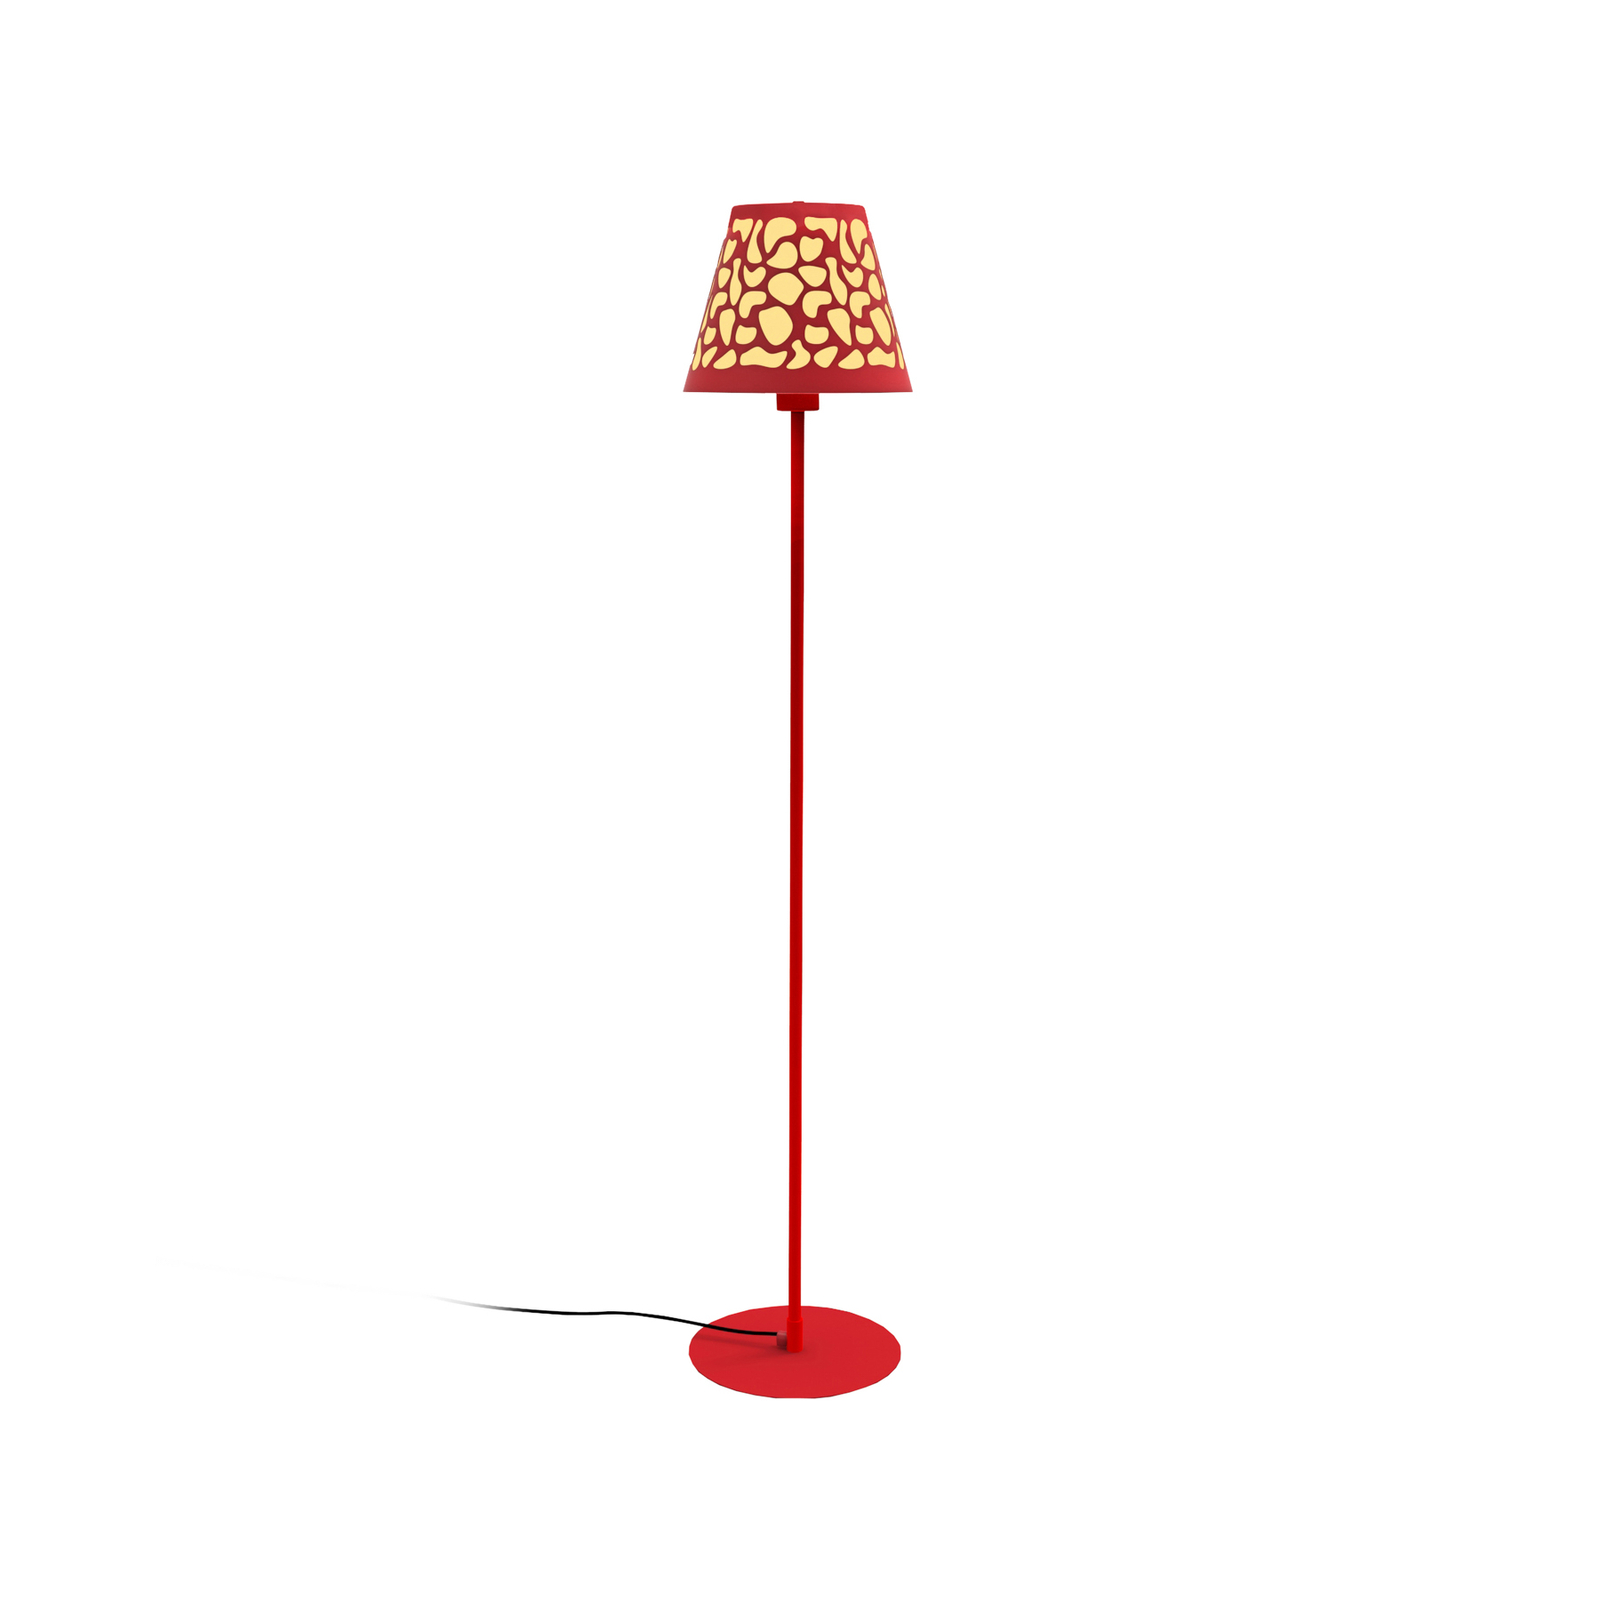 Aluminor Nihoa Stehlampe mit Lochmuster, rot/gelb